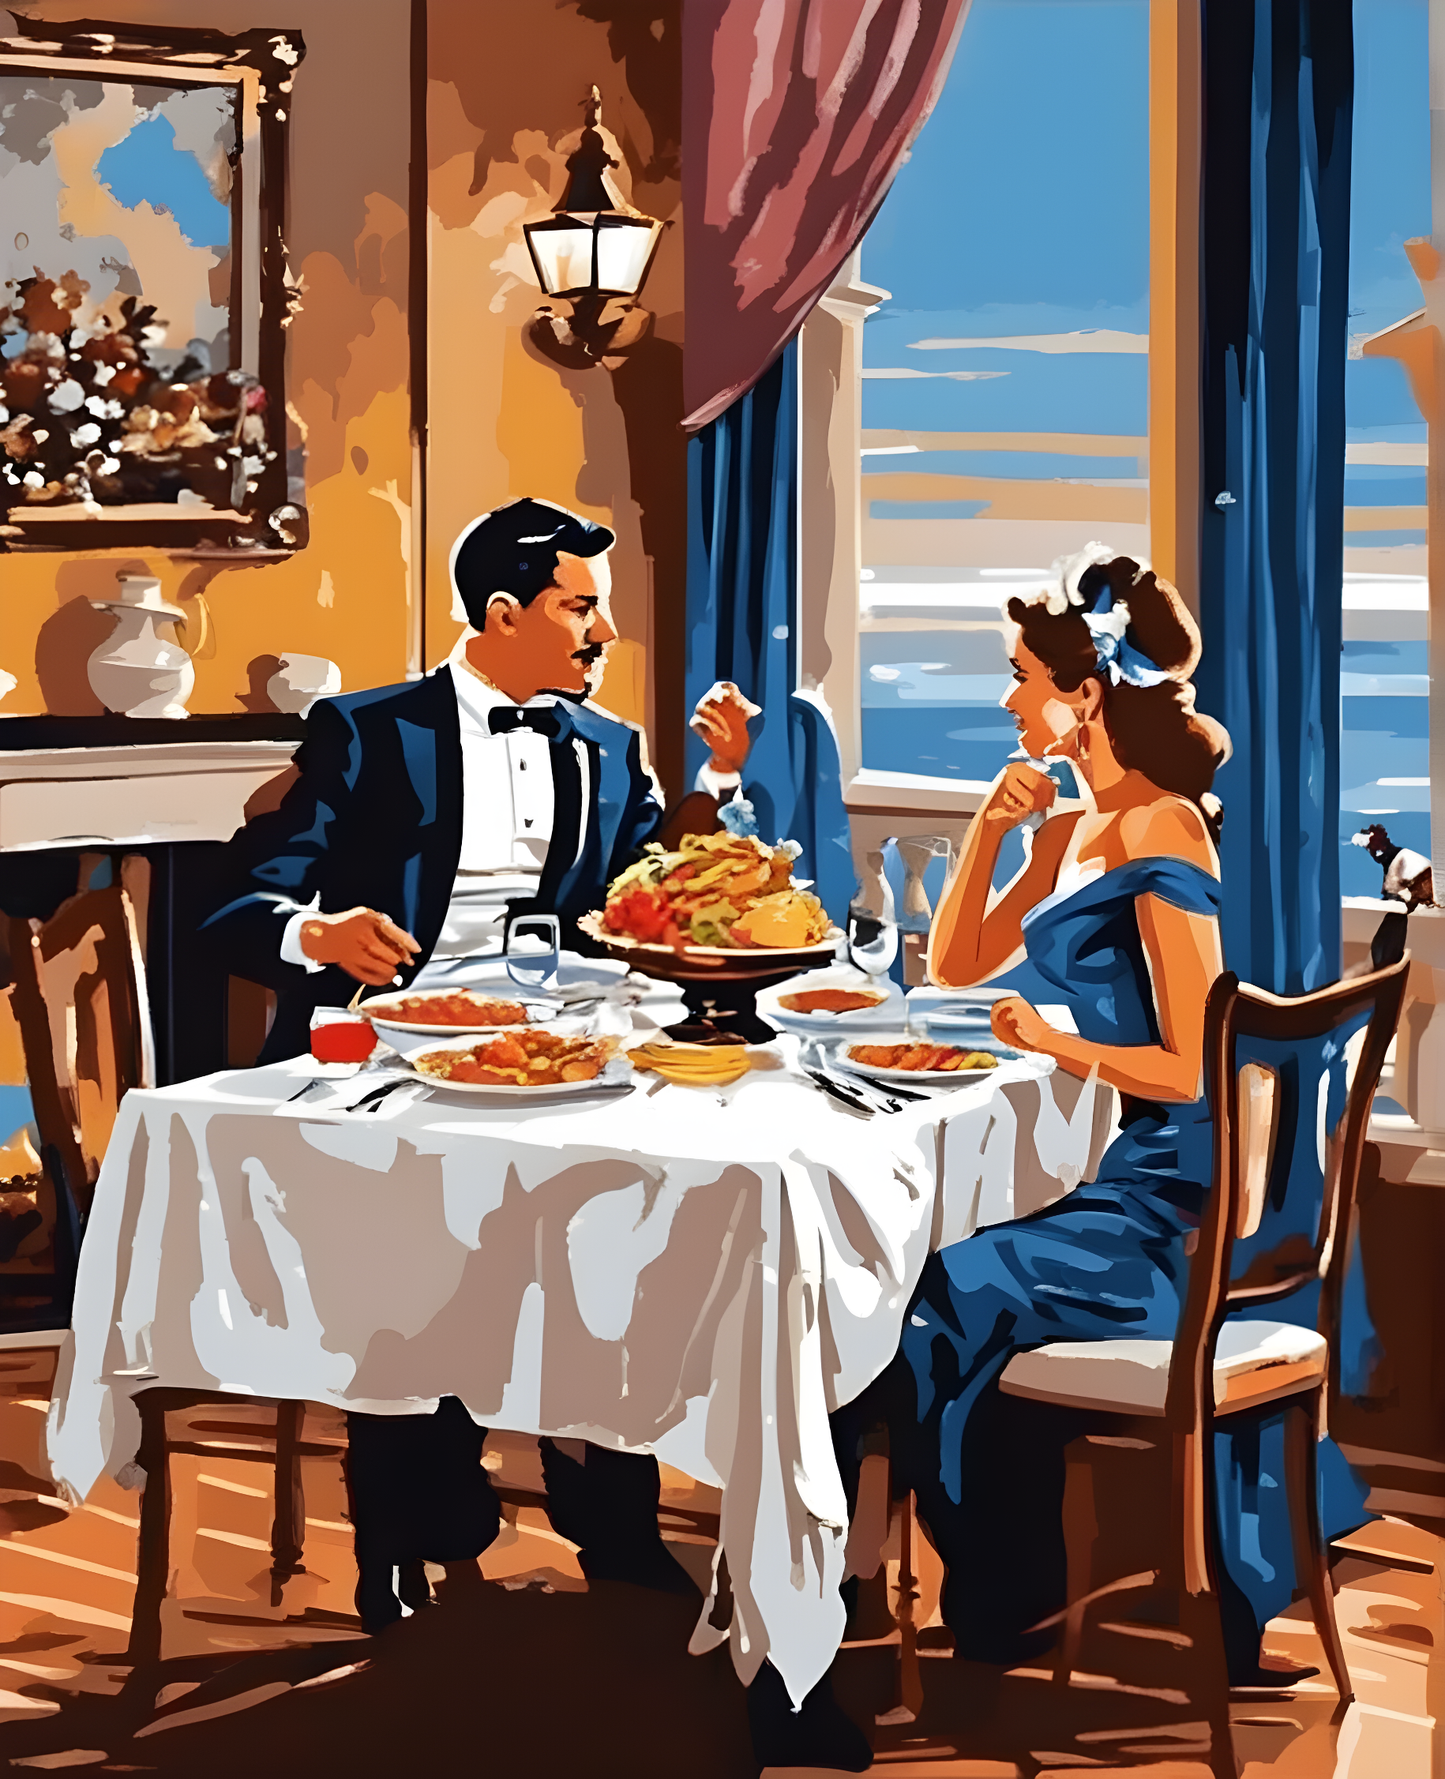 Romantic Supper - Van-Go Paint-By-Number Kit